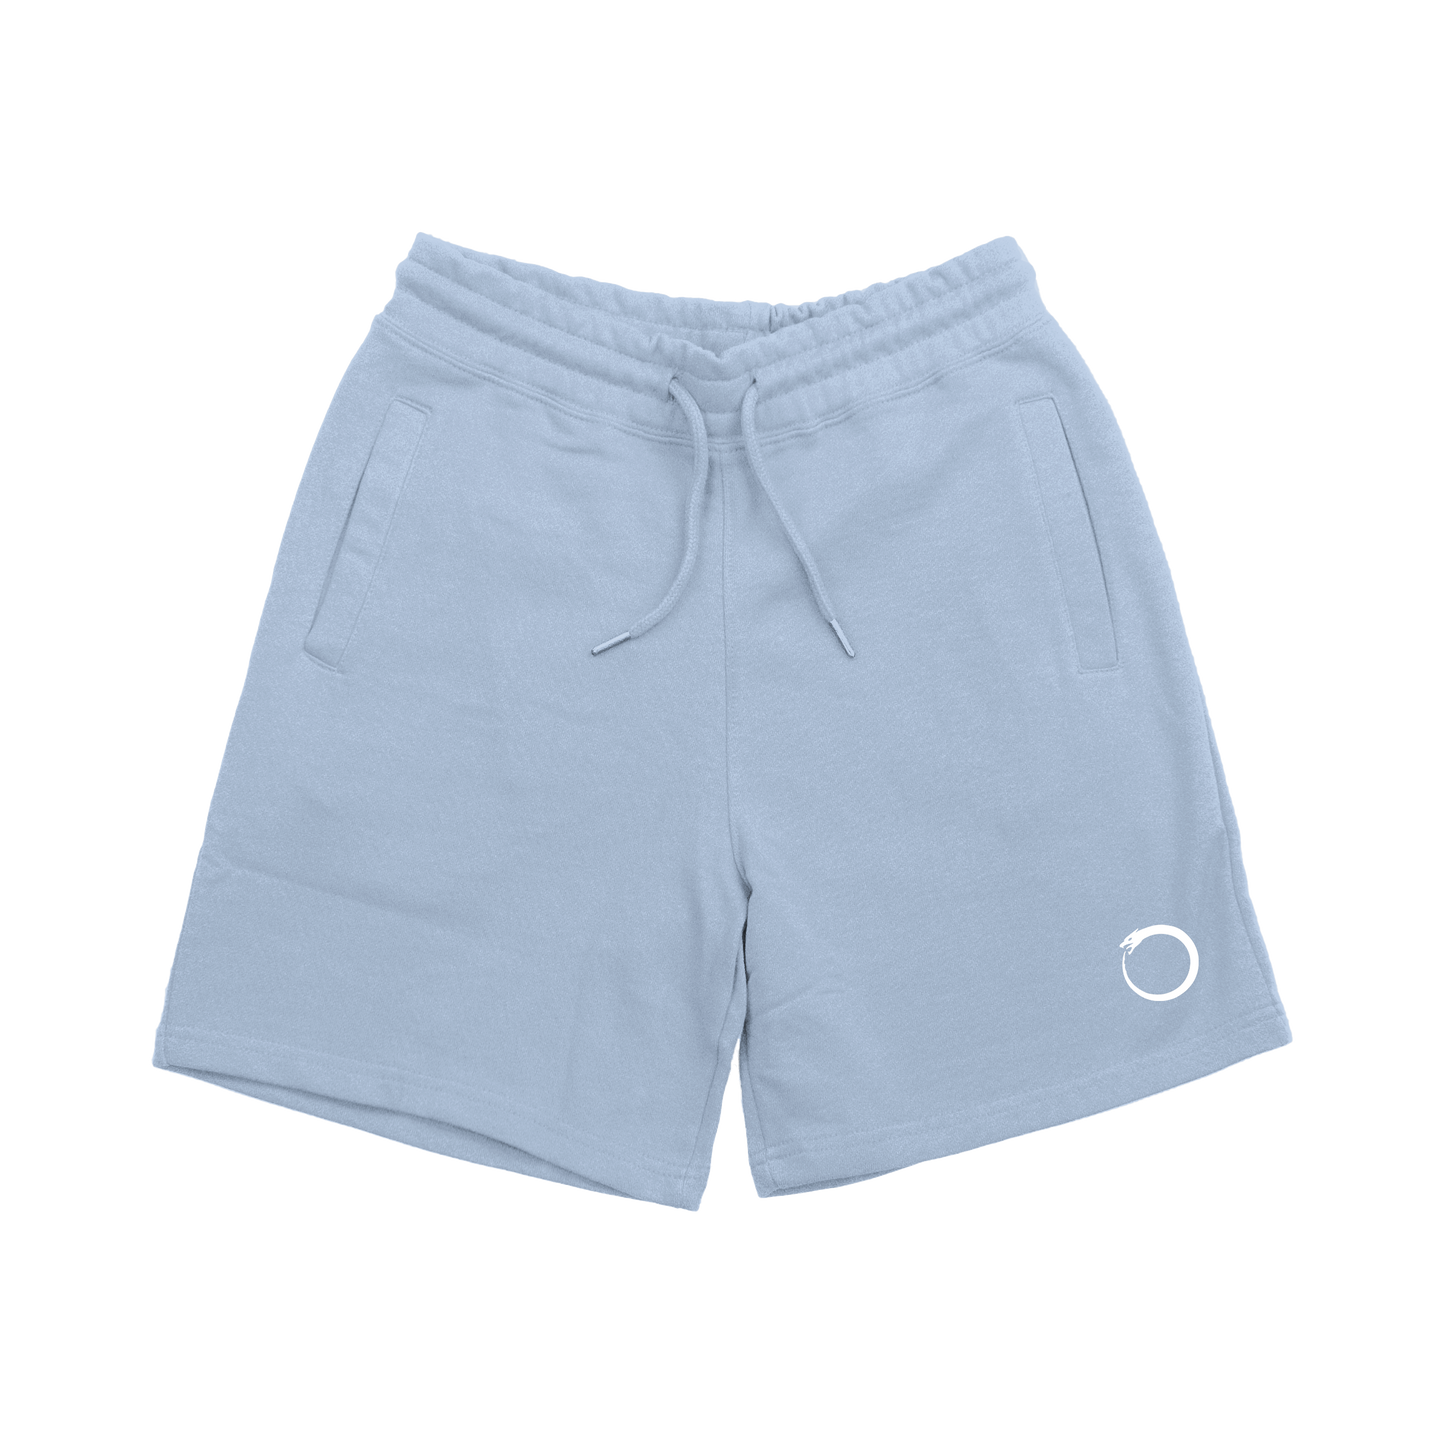 Classic Orochi Shorts - Cloudy Blue